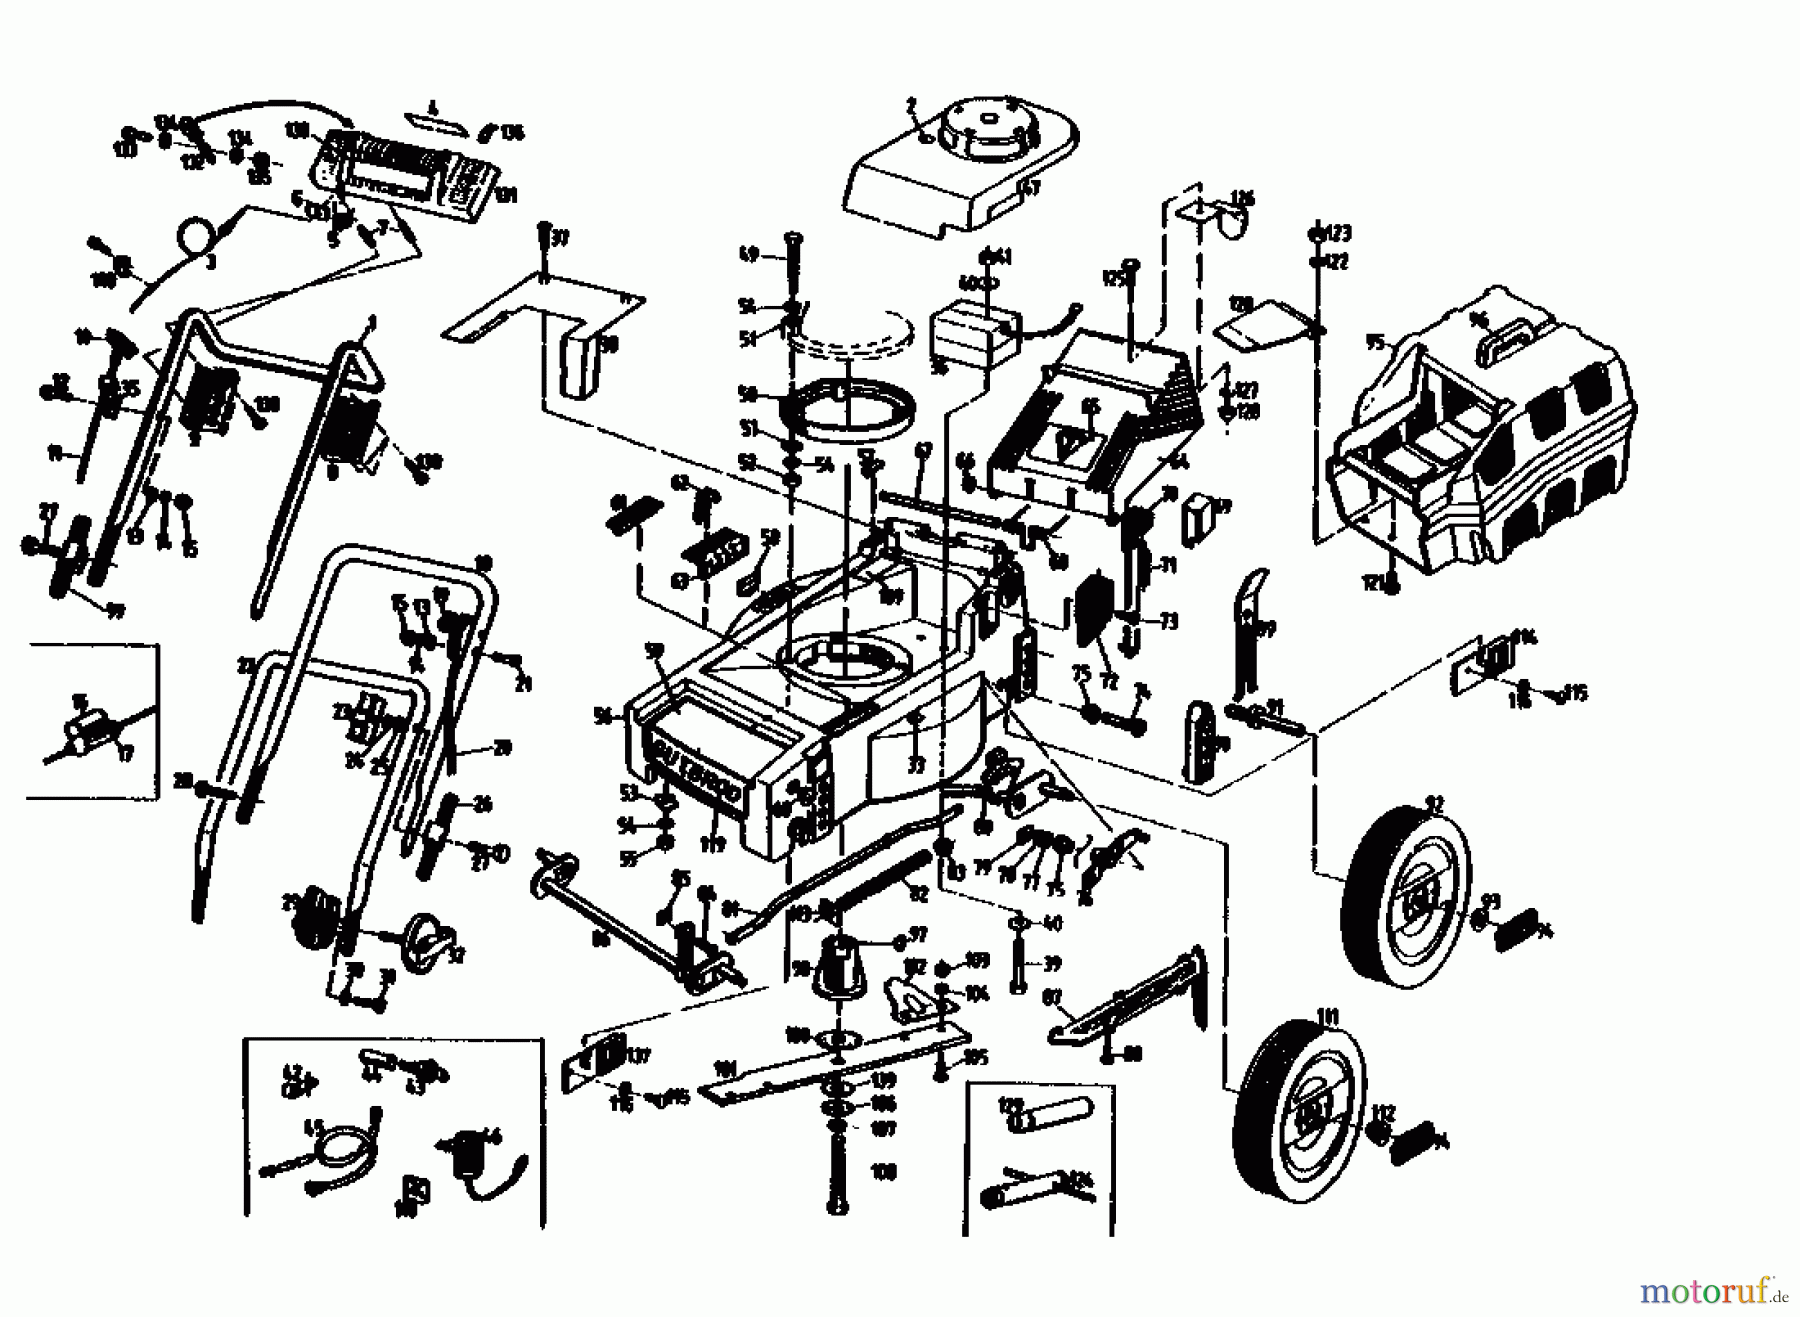  Gutbrod Petrol mower HB 40 LBS 02896.05  (1990) Basic machine